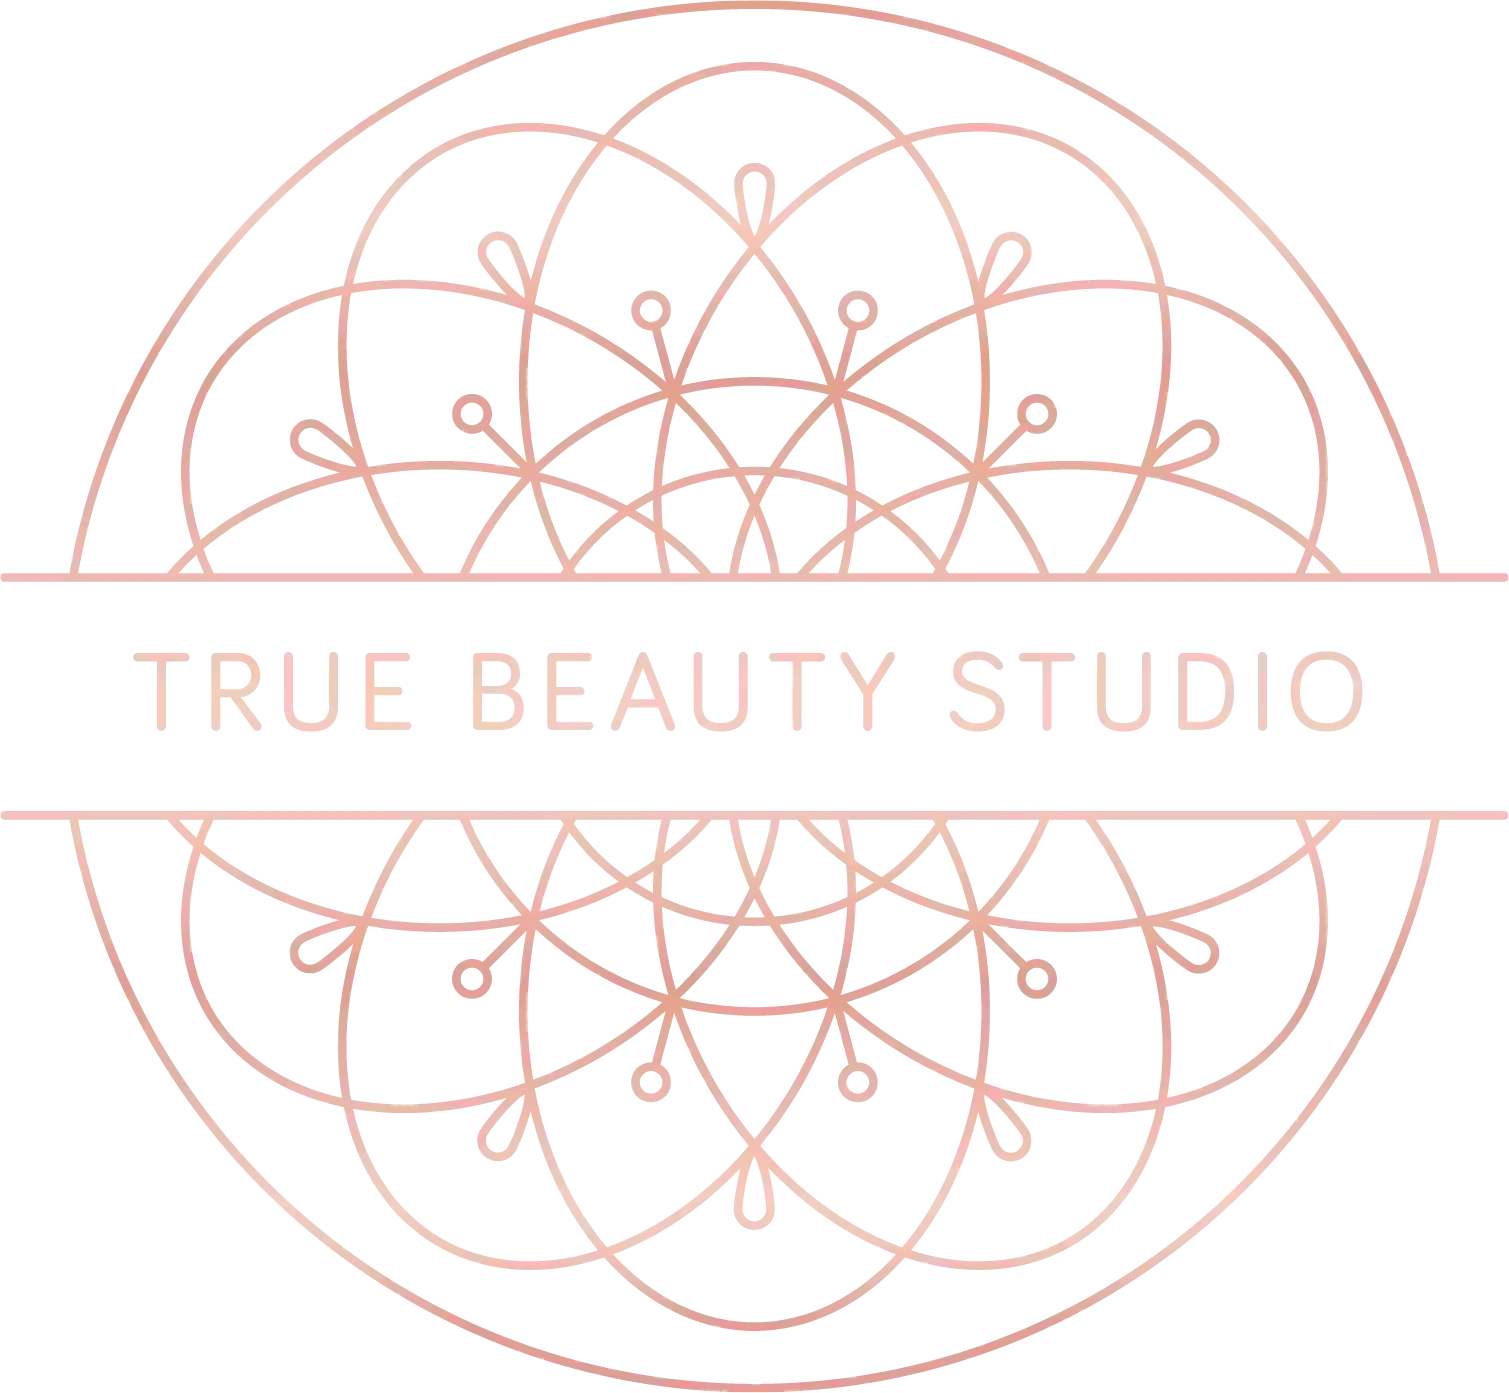 True Beauty Studio